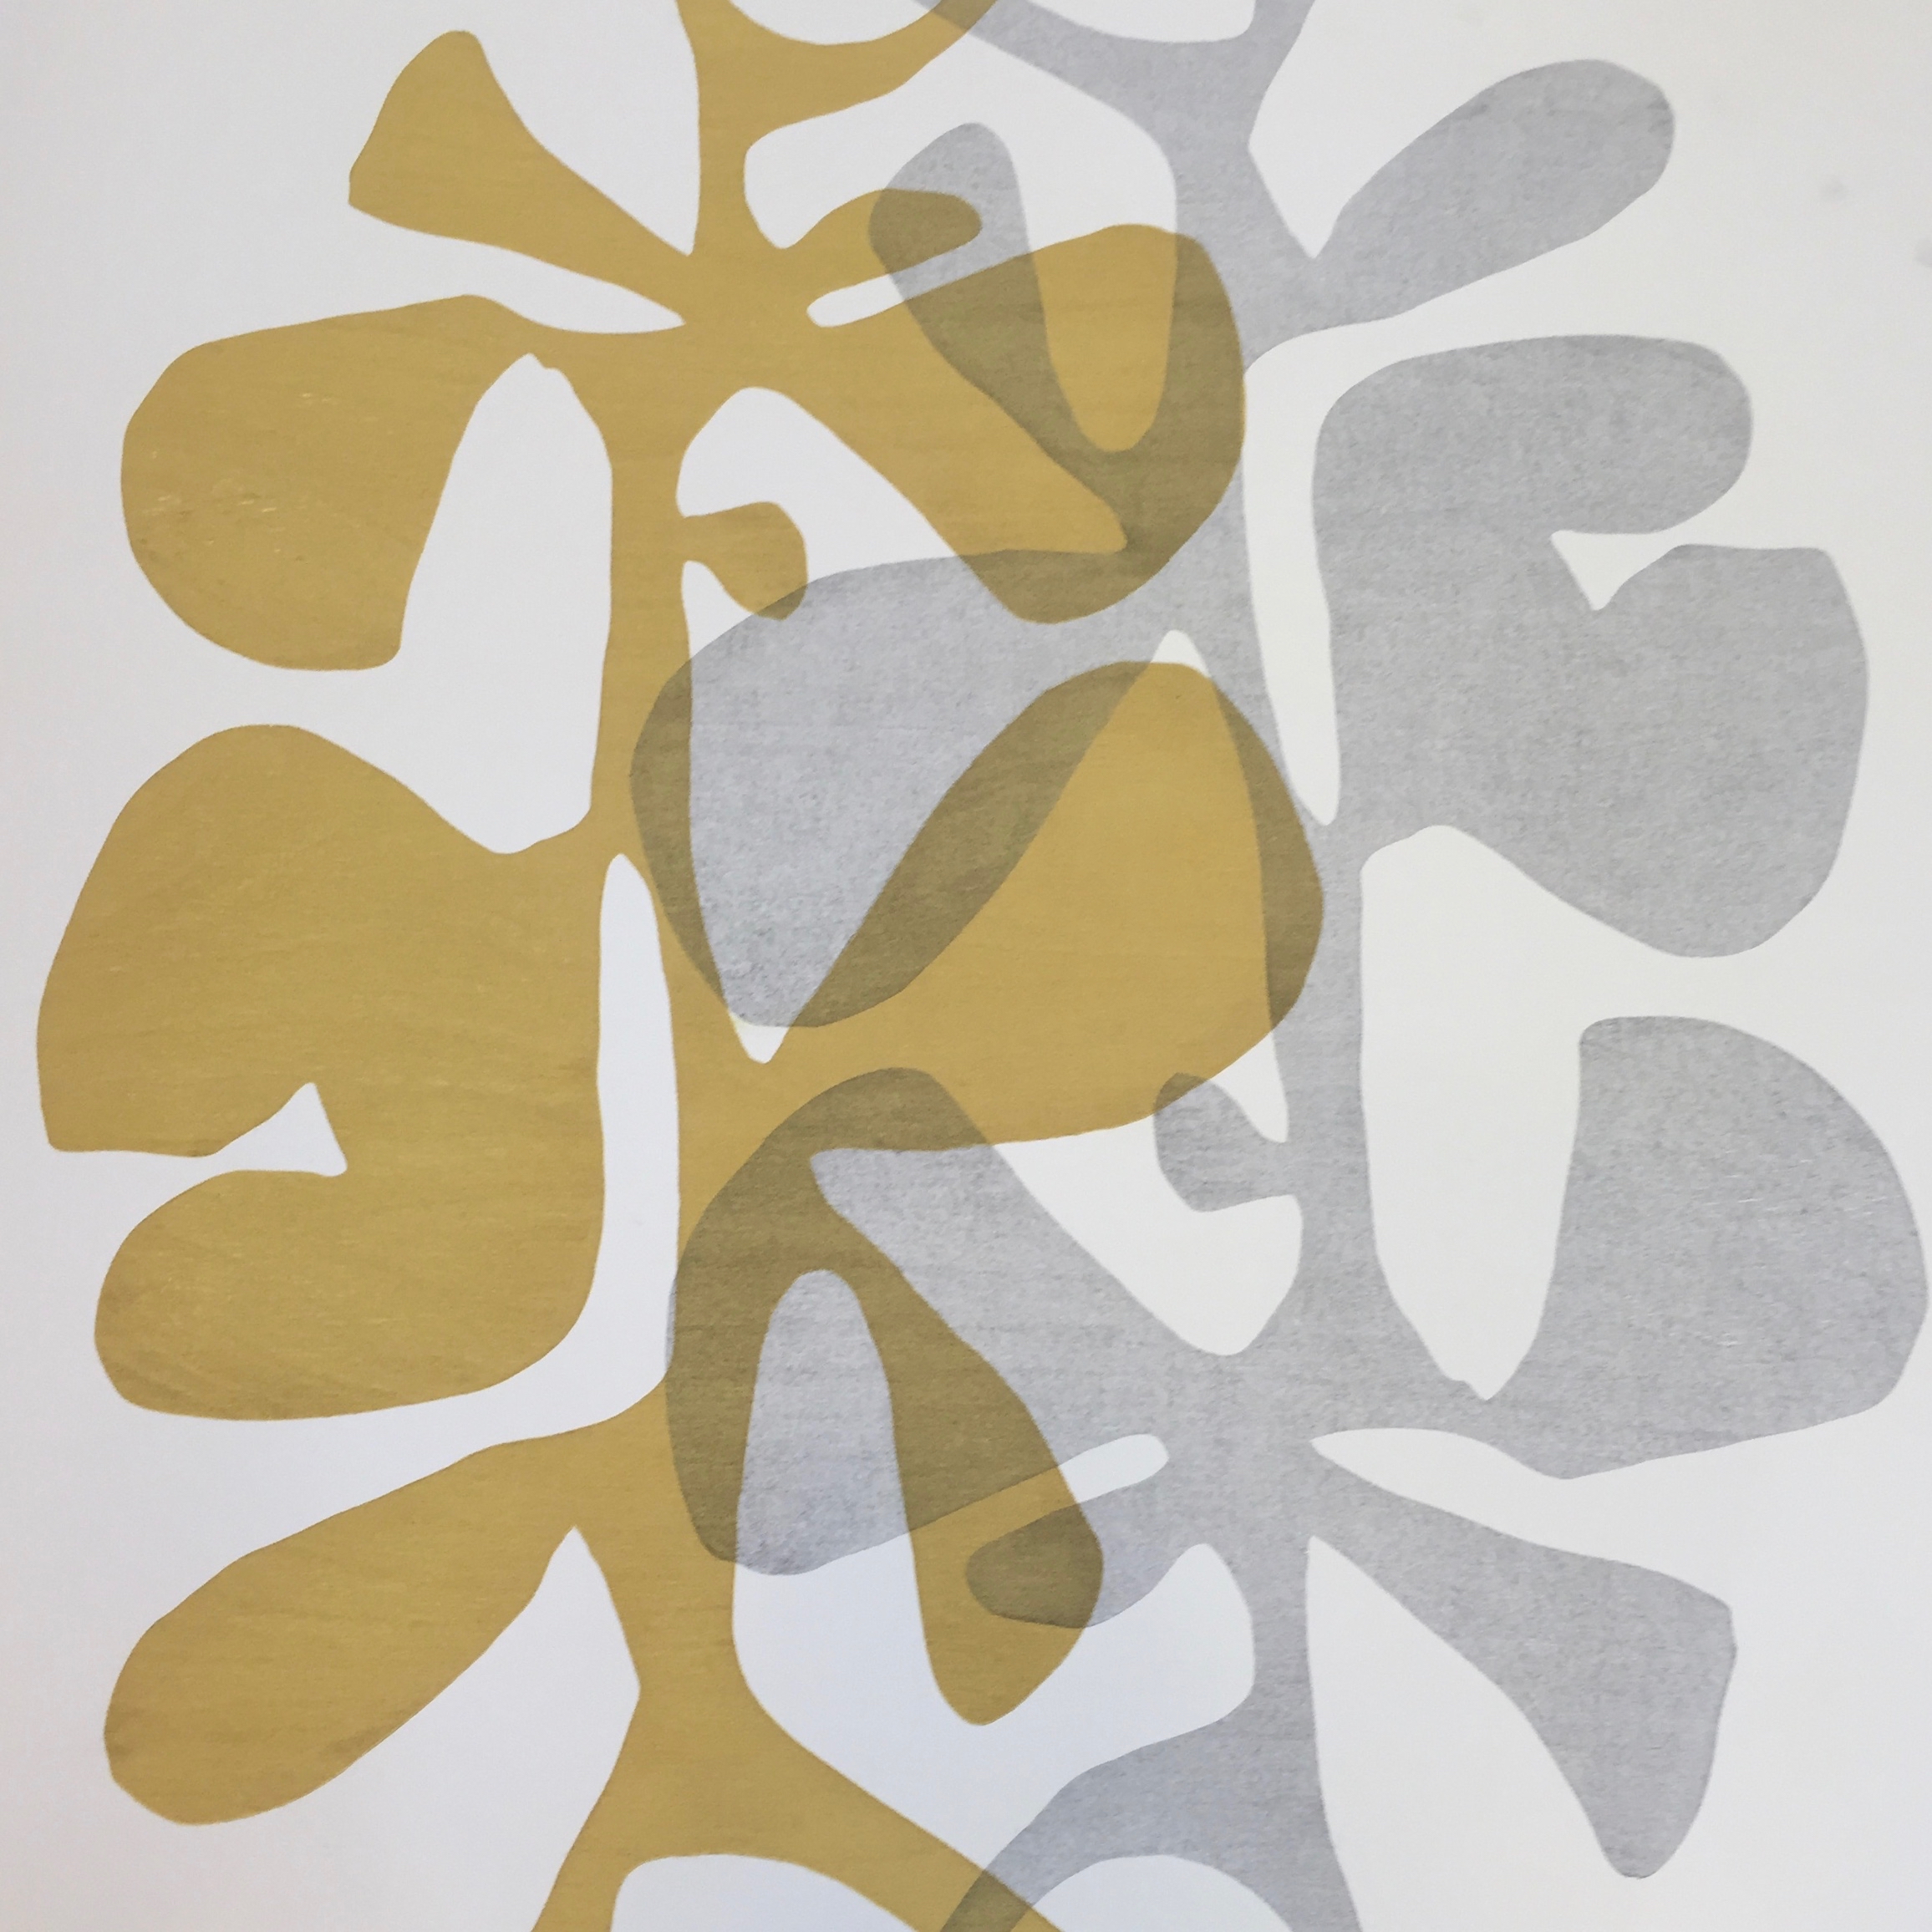 Bauhaus Botanical - Gold/Pale Grey/Tan: created by Monica Monaghan-Milstein for MonicaArts Design LLC